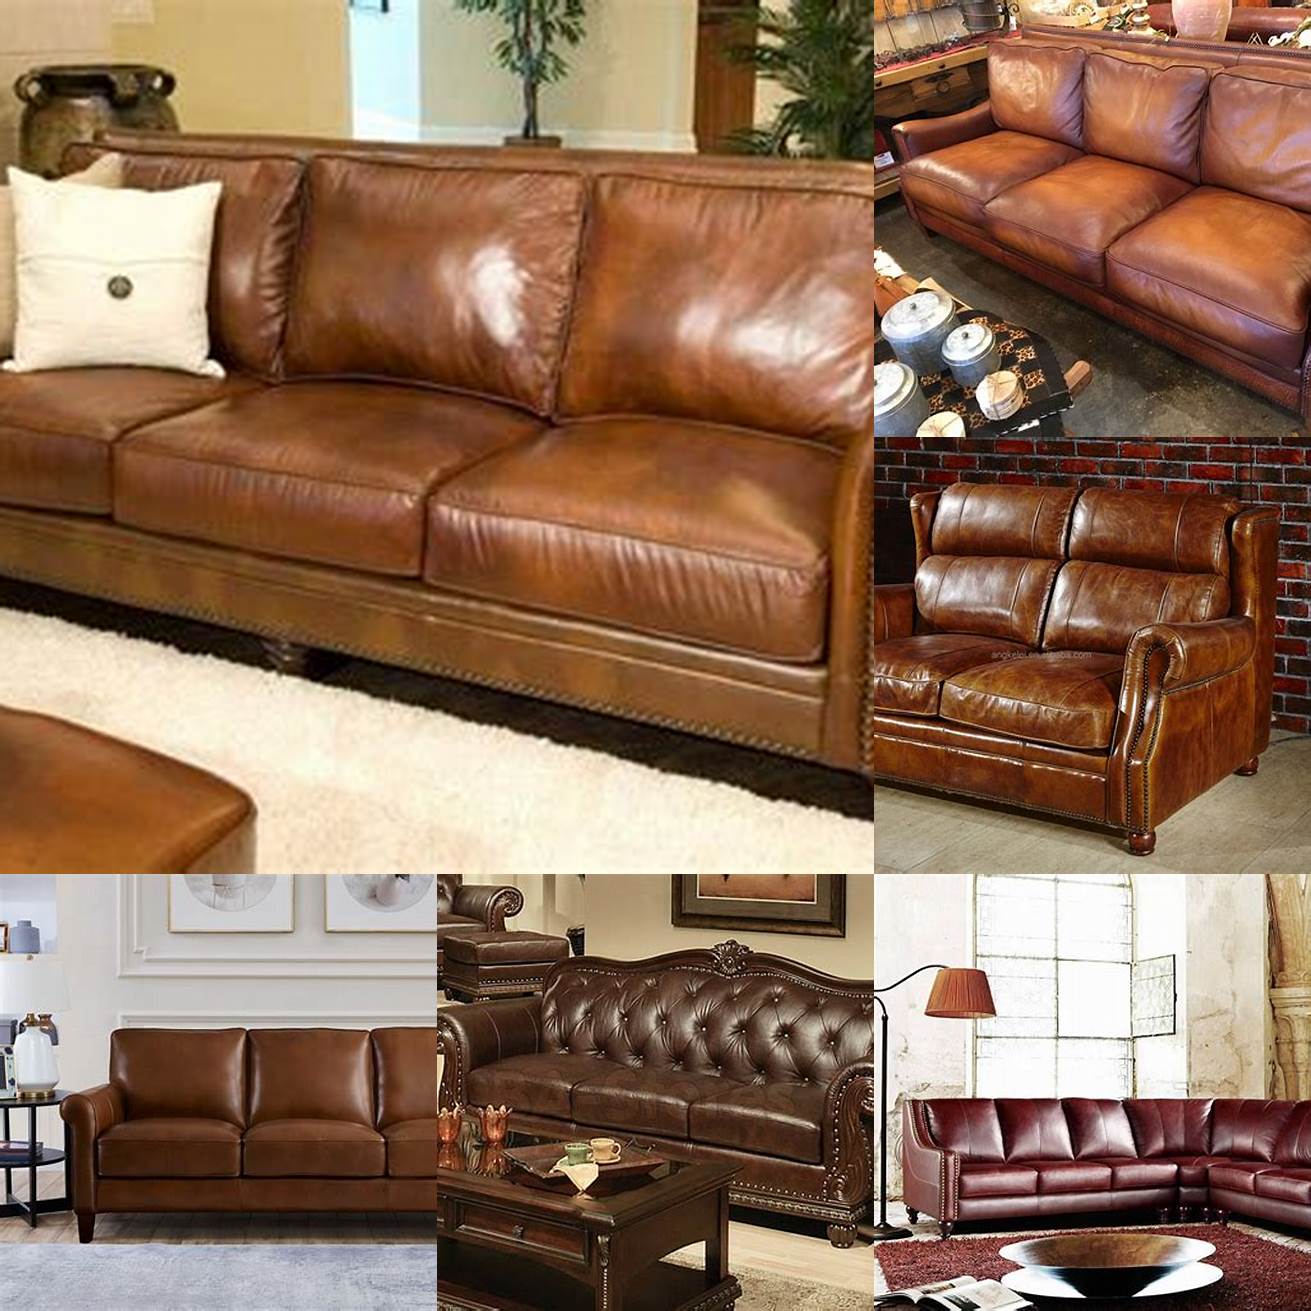 Full-grain leather sofa